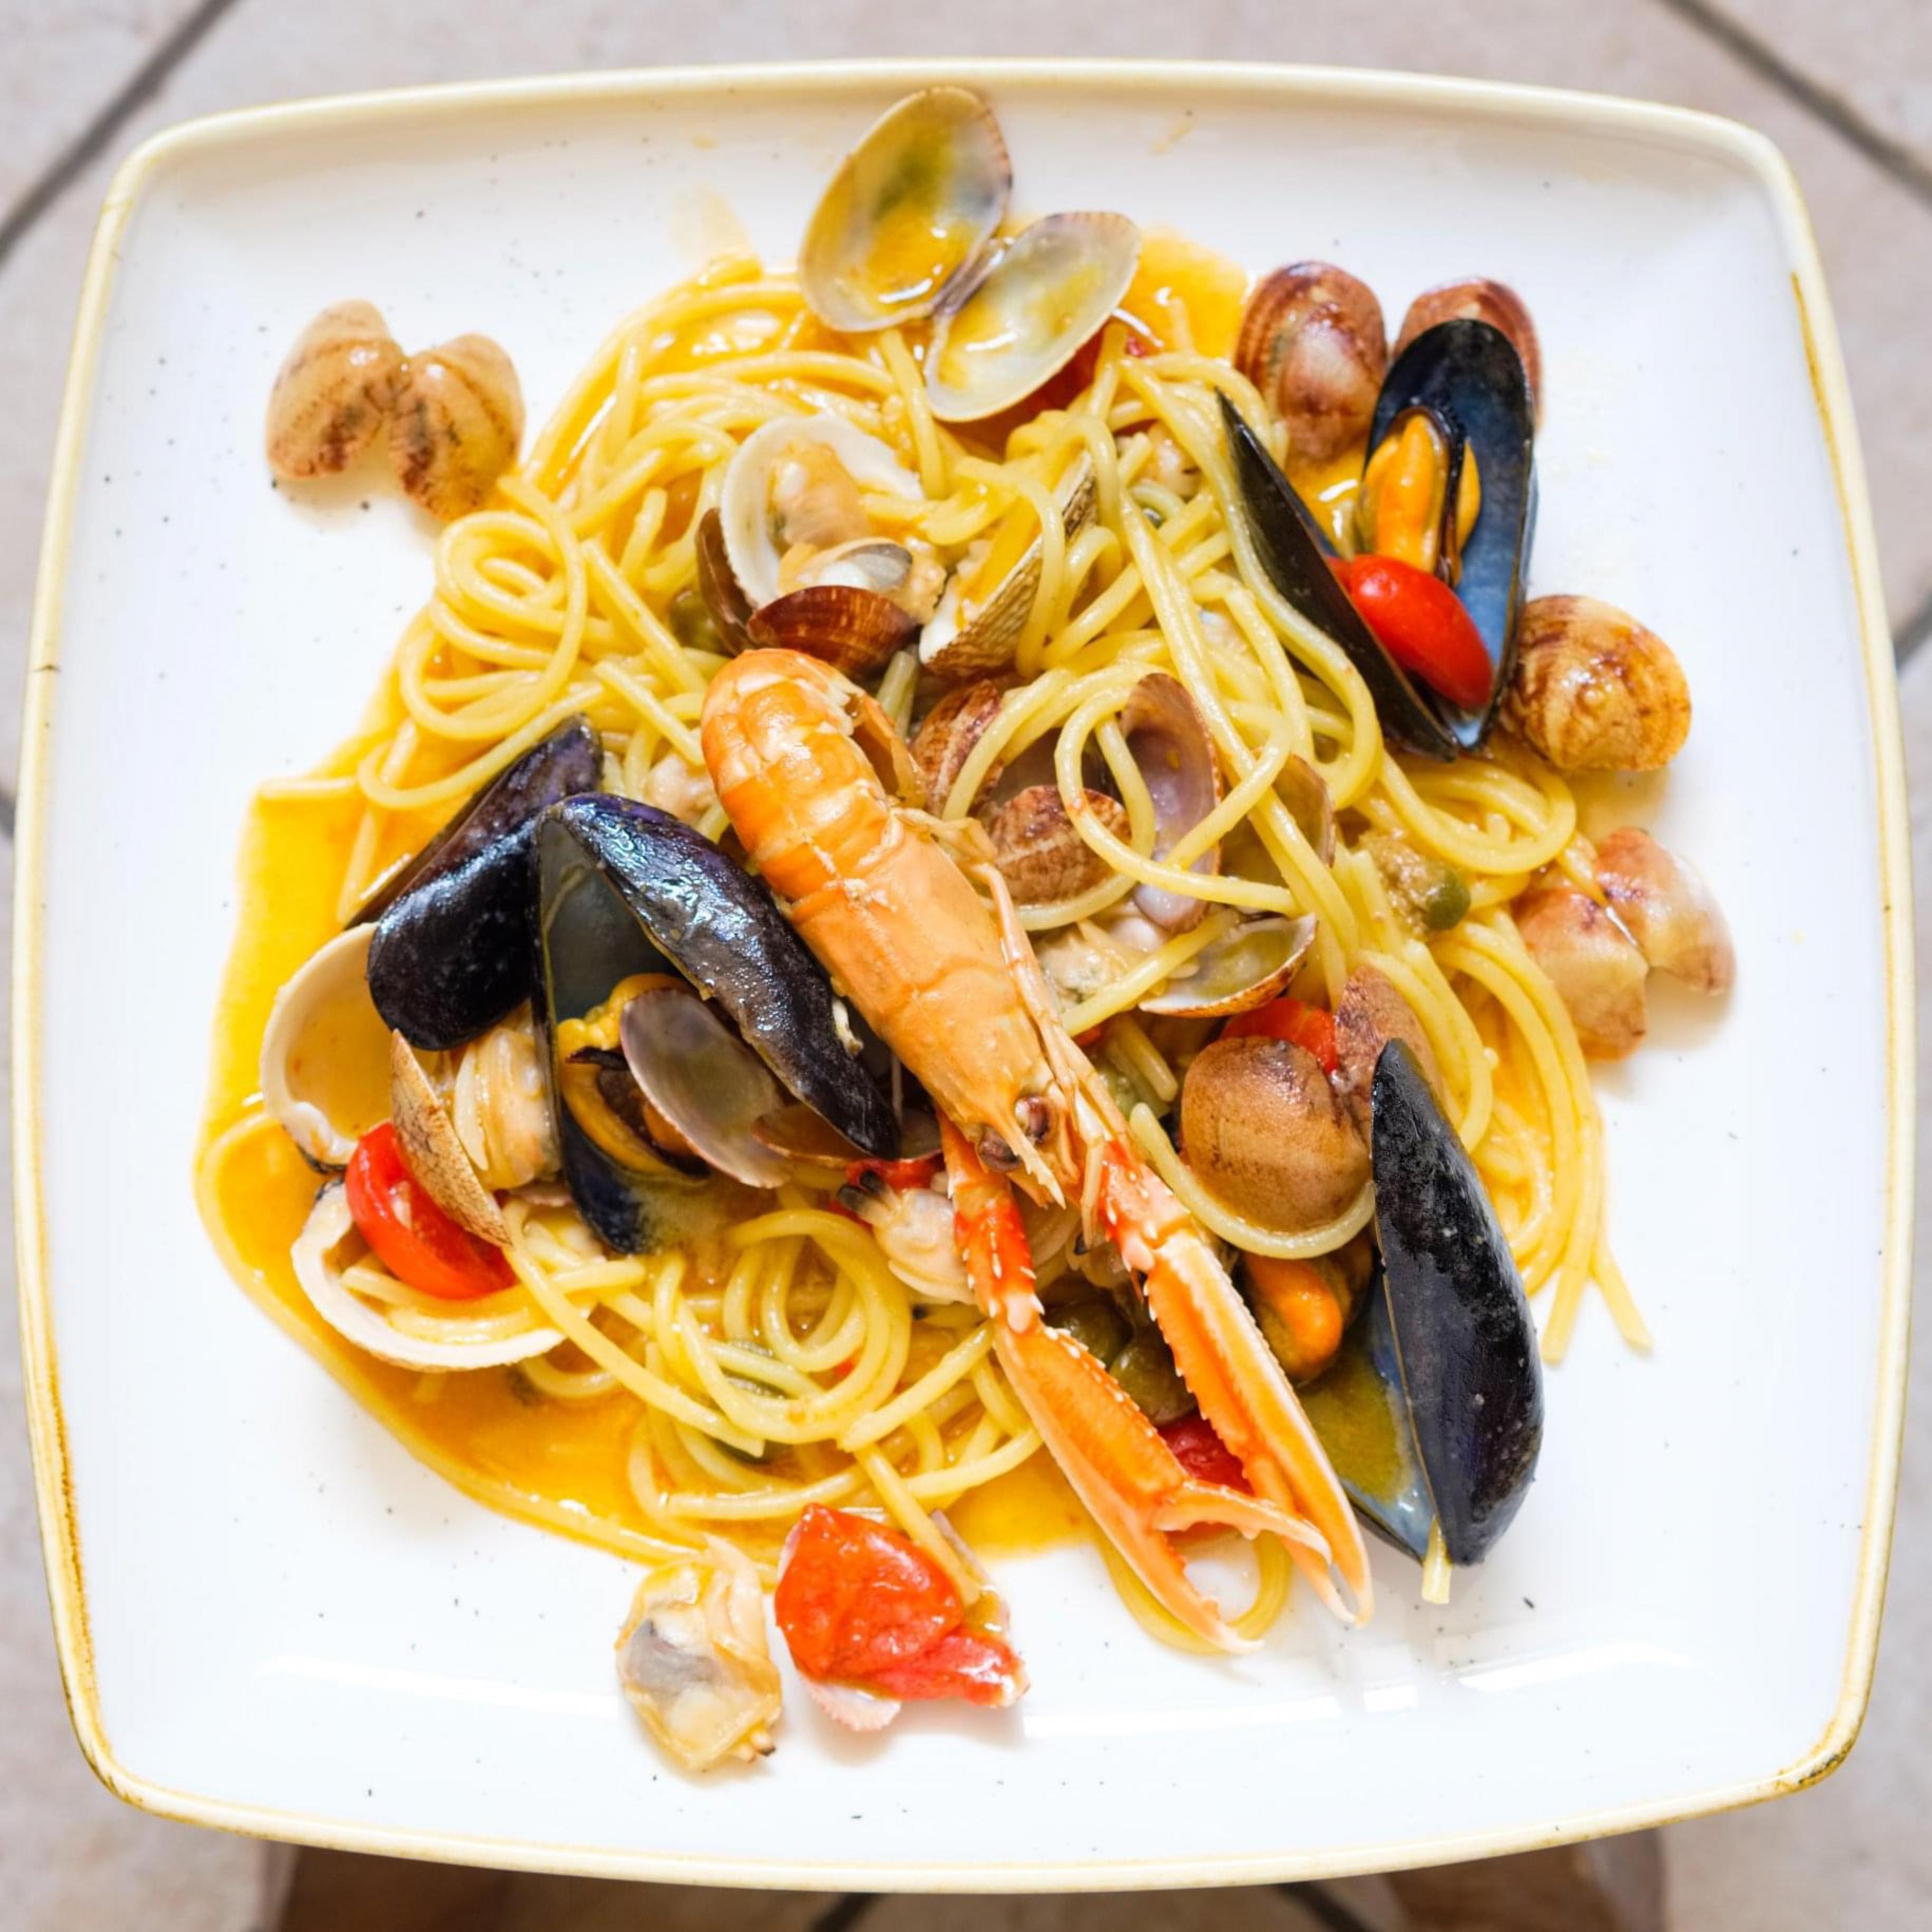 Seafood pasta at A'Paranza restaurant, Amalfi Coast, Italy